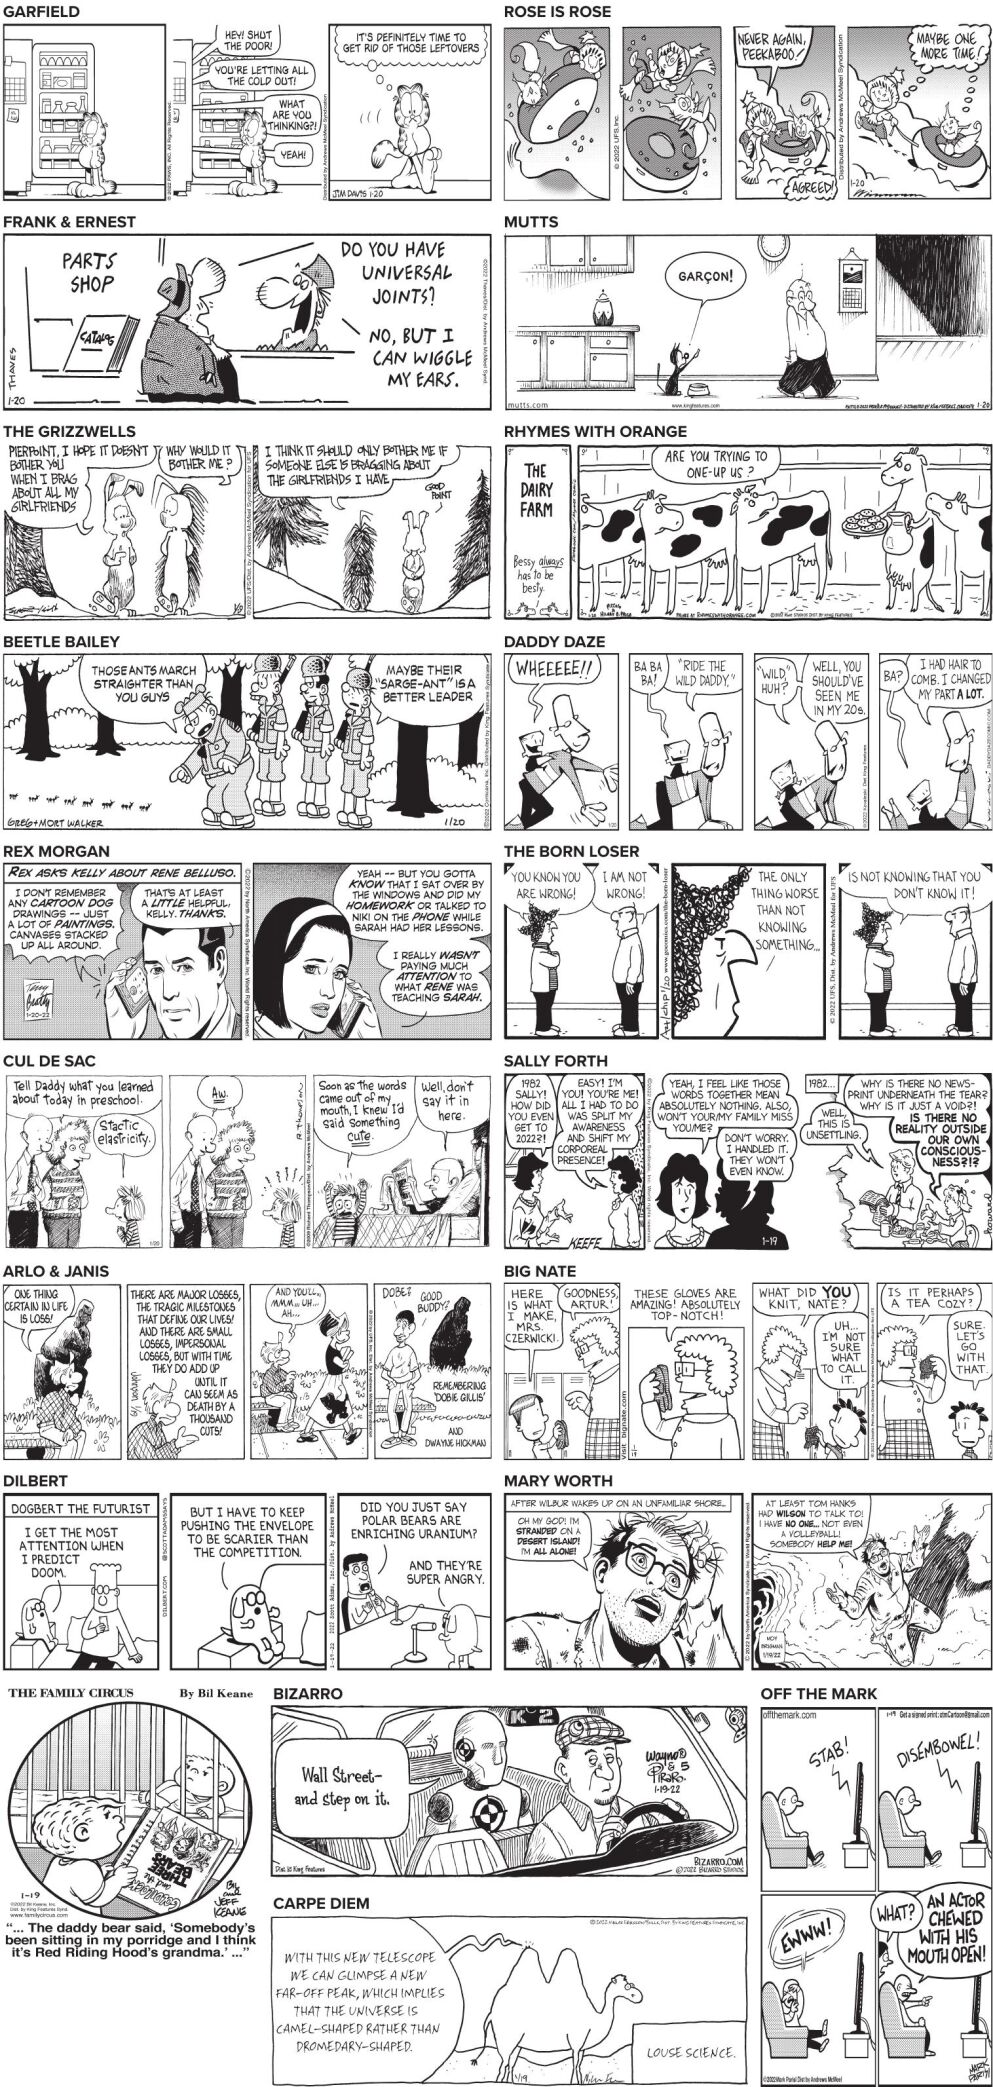 Jan. 20 comics